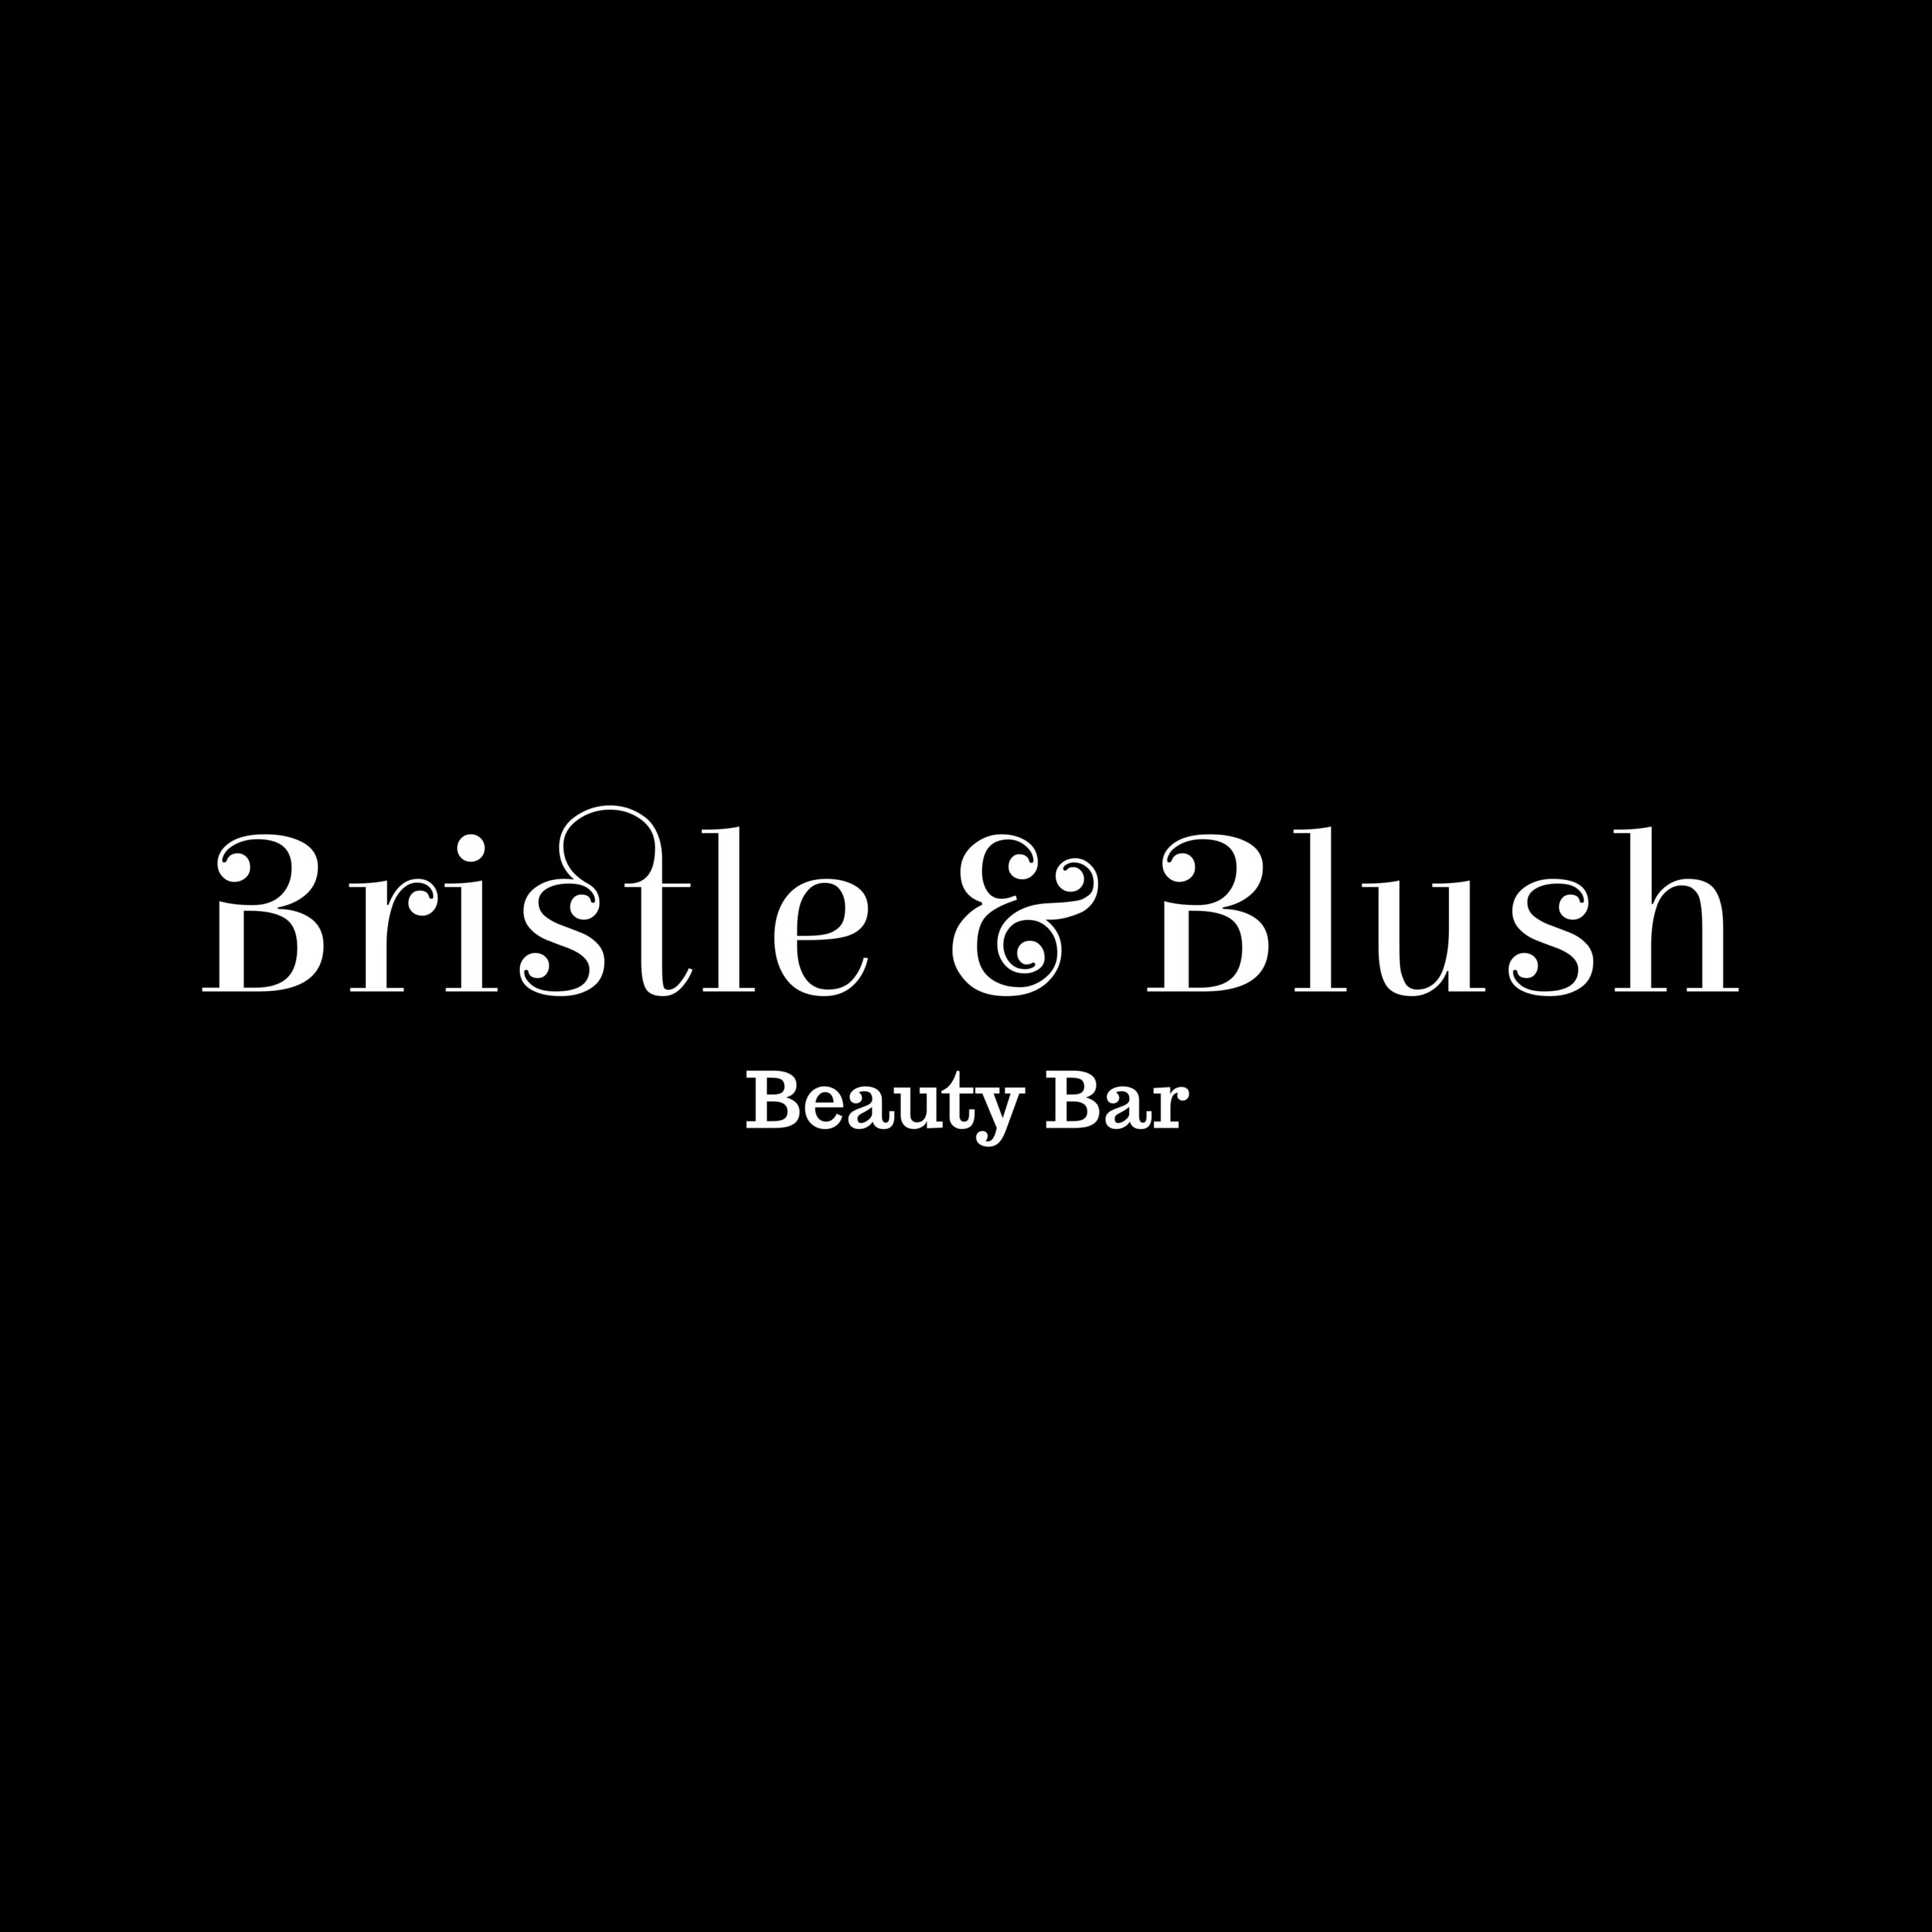 Bristle & Blush Beauty Bar